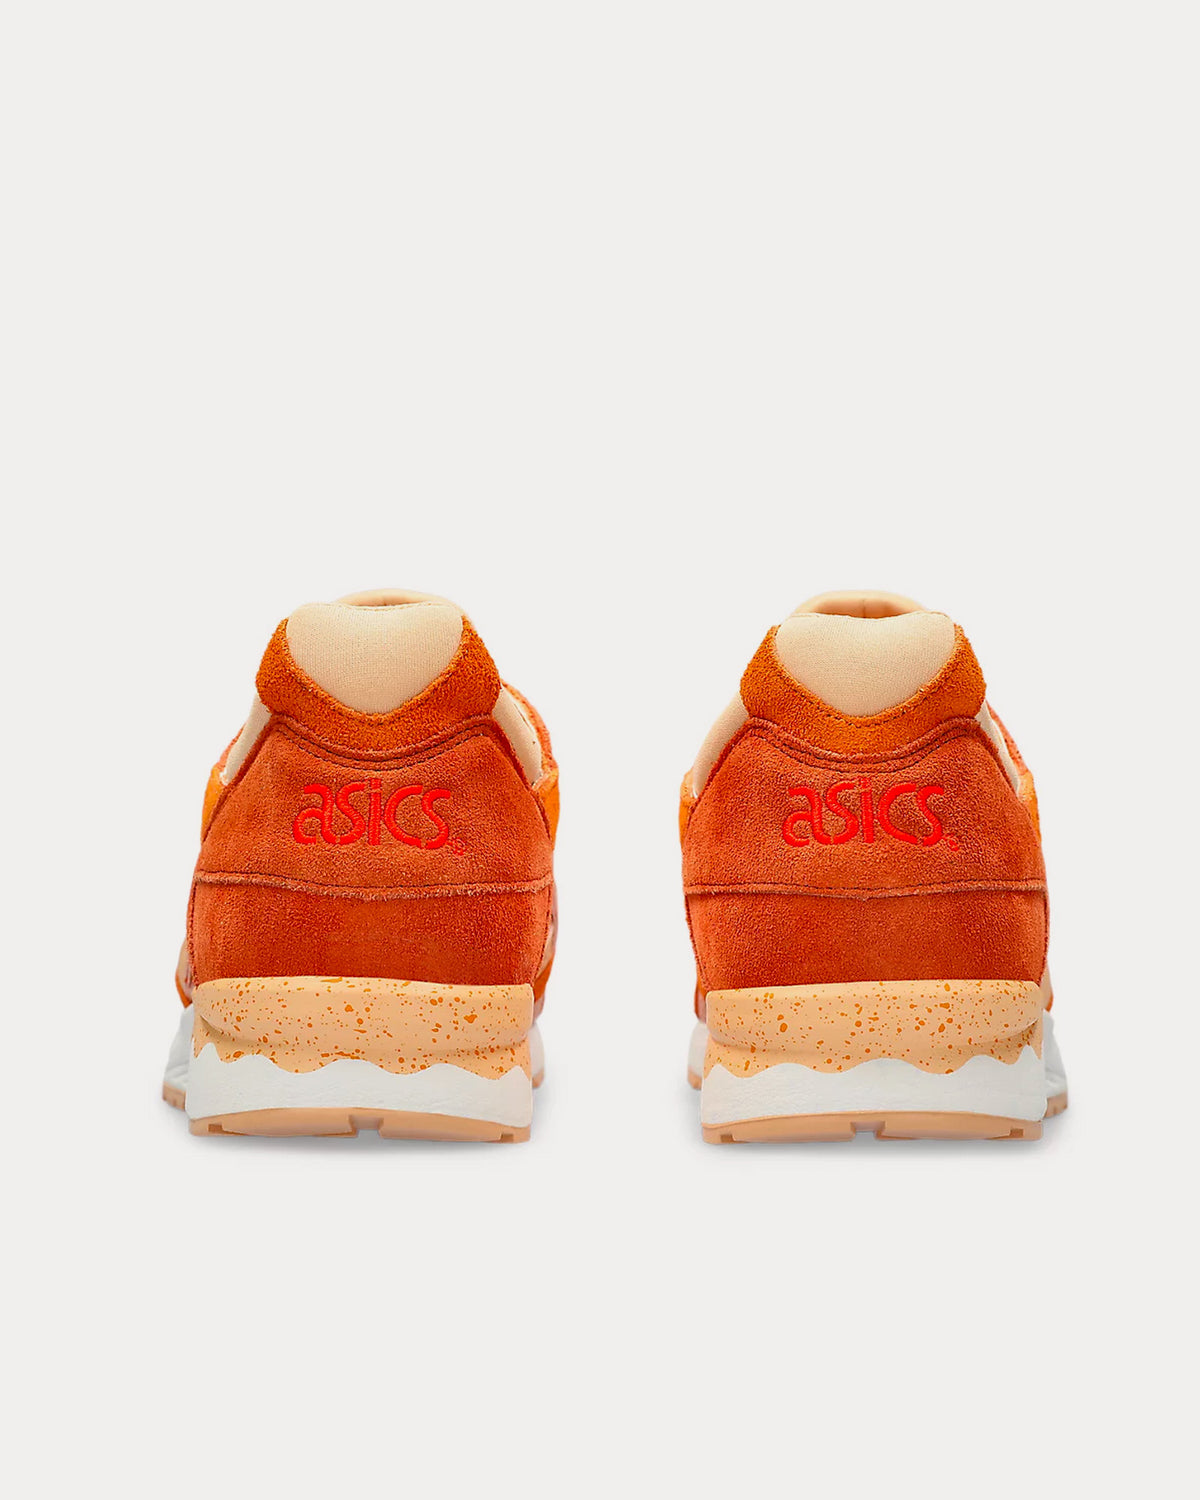 Asics - Gel-Lyte V 'Godai' Terracotta / Bengal Orange Low Top Sneakers